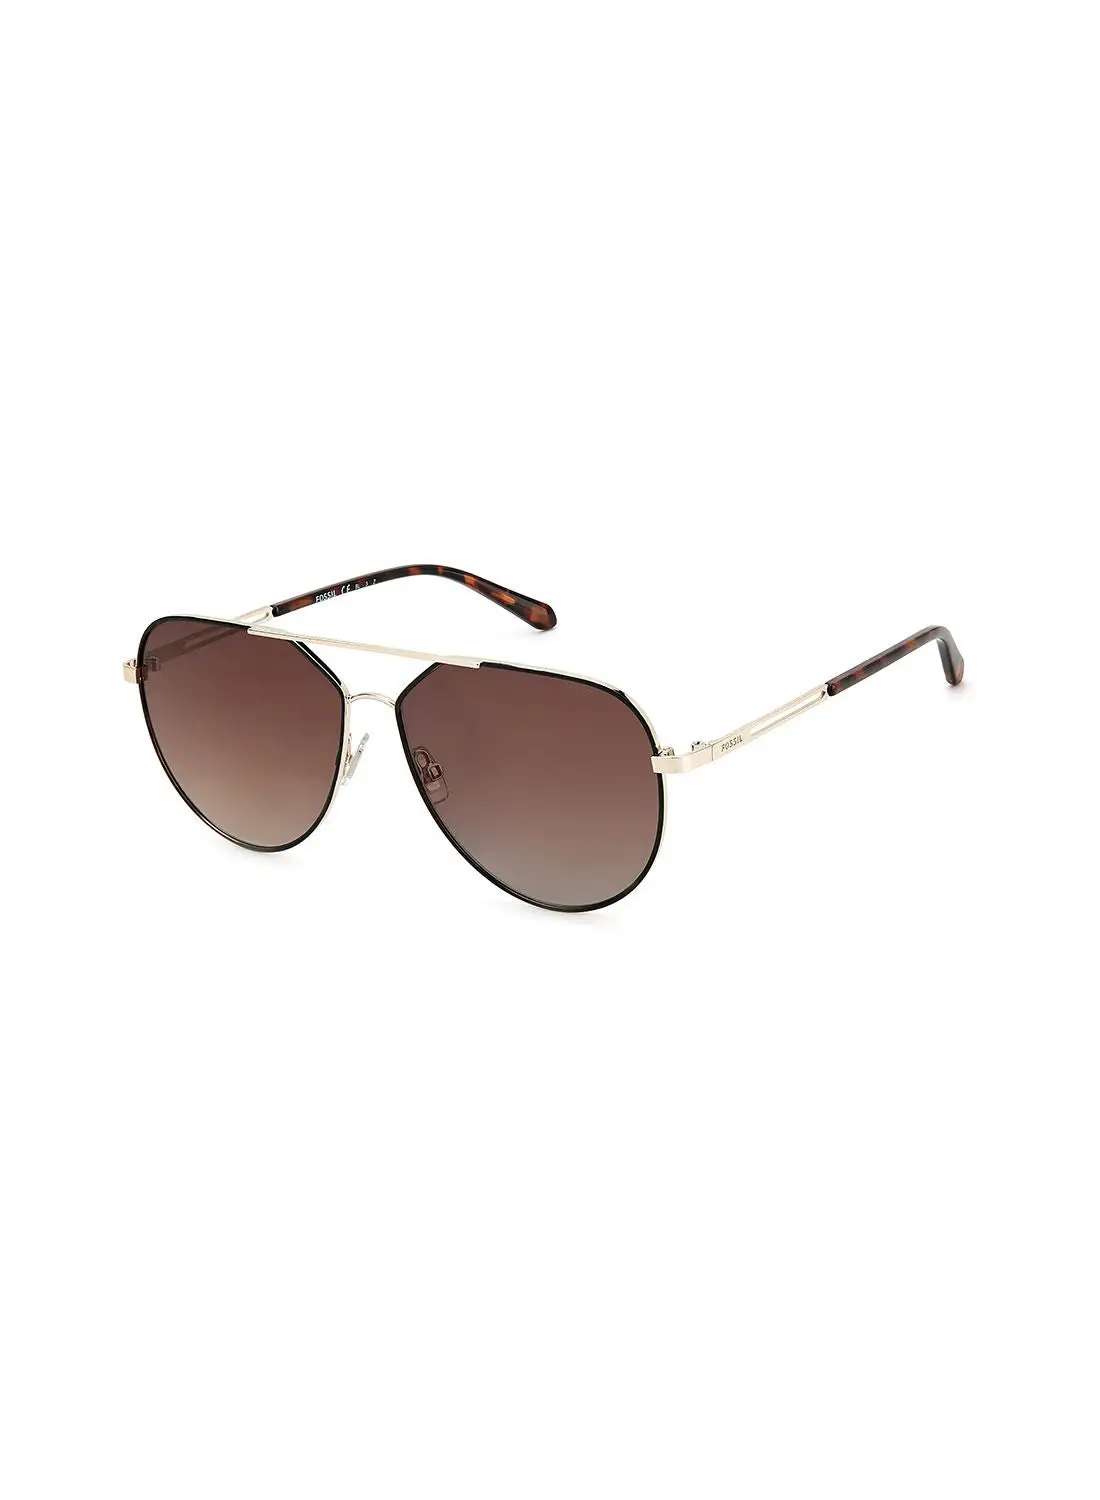 FOSSIL Women's UV Protection Pilot Sunglasses - Fos 3134/G/S Mtt Black 57 - Lens Size: 57 Mm